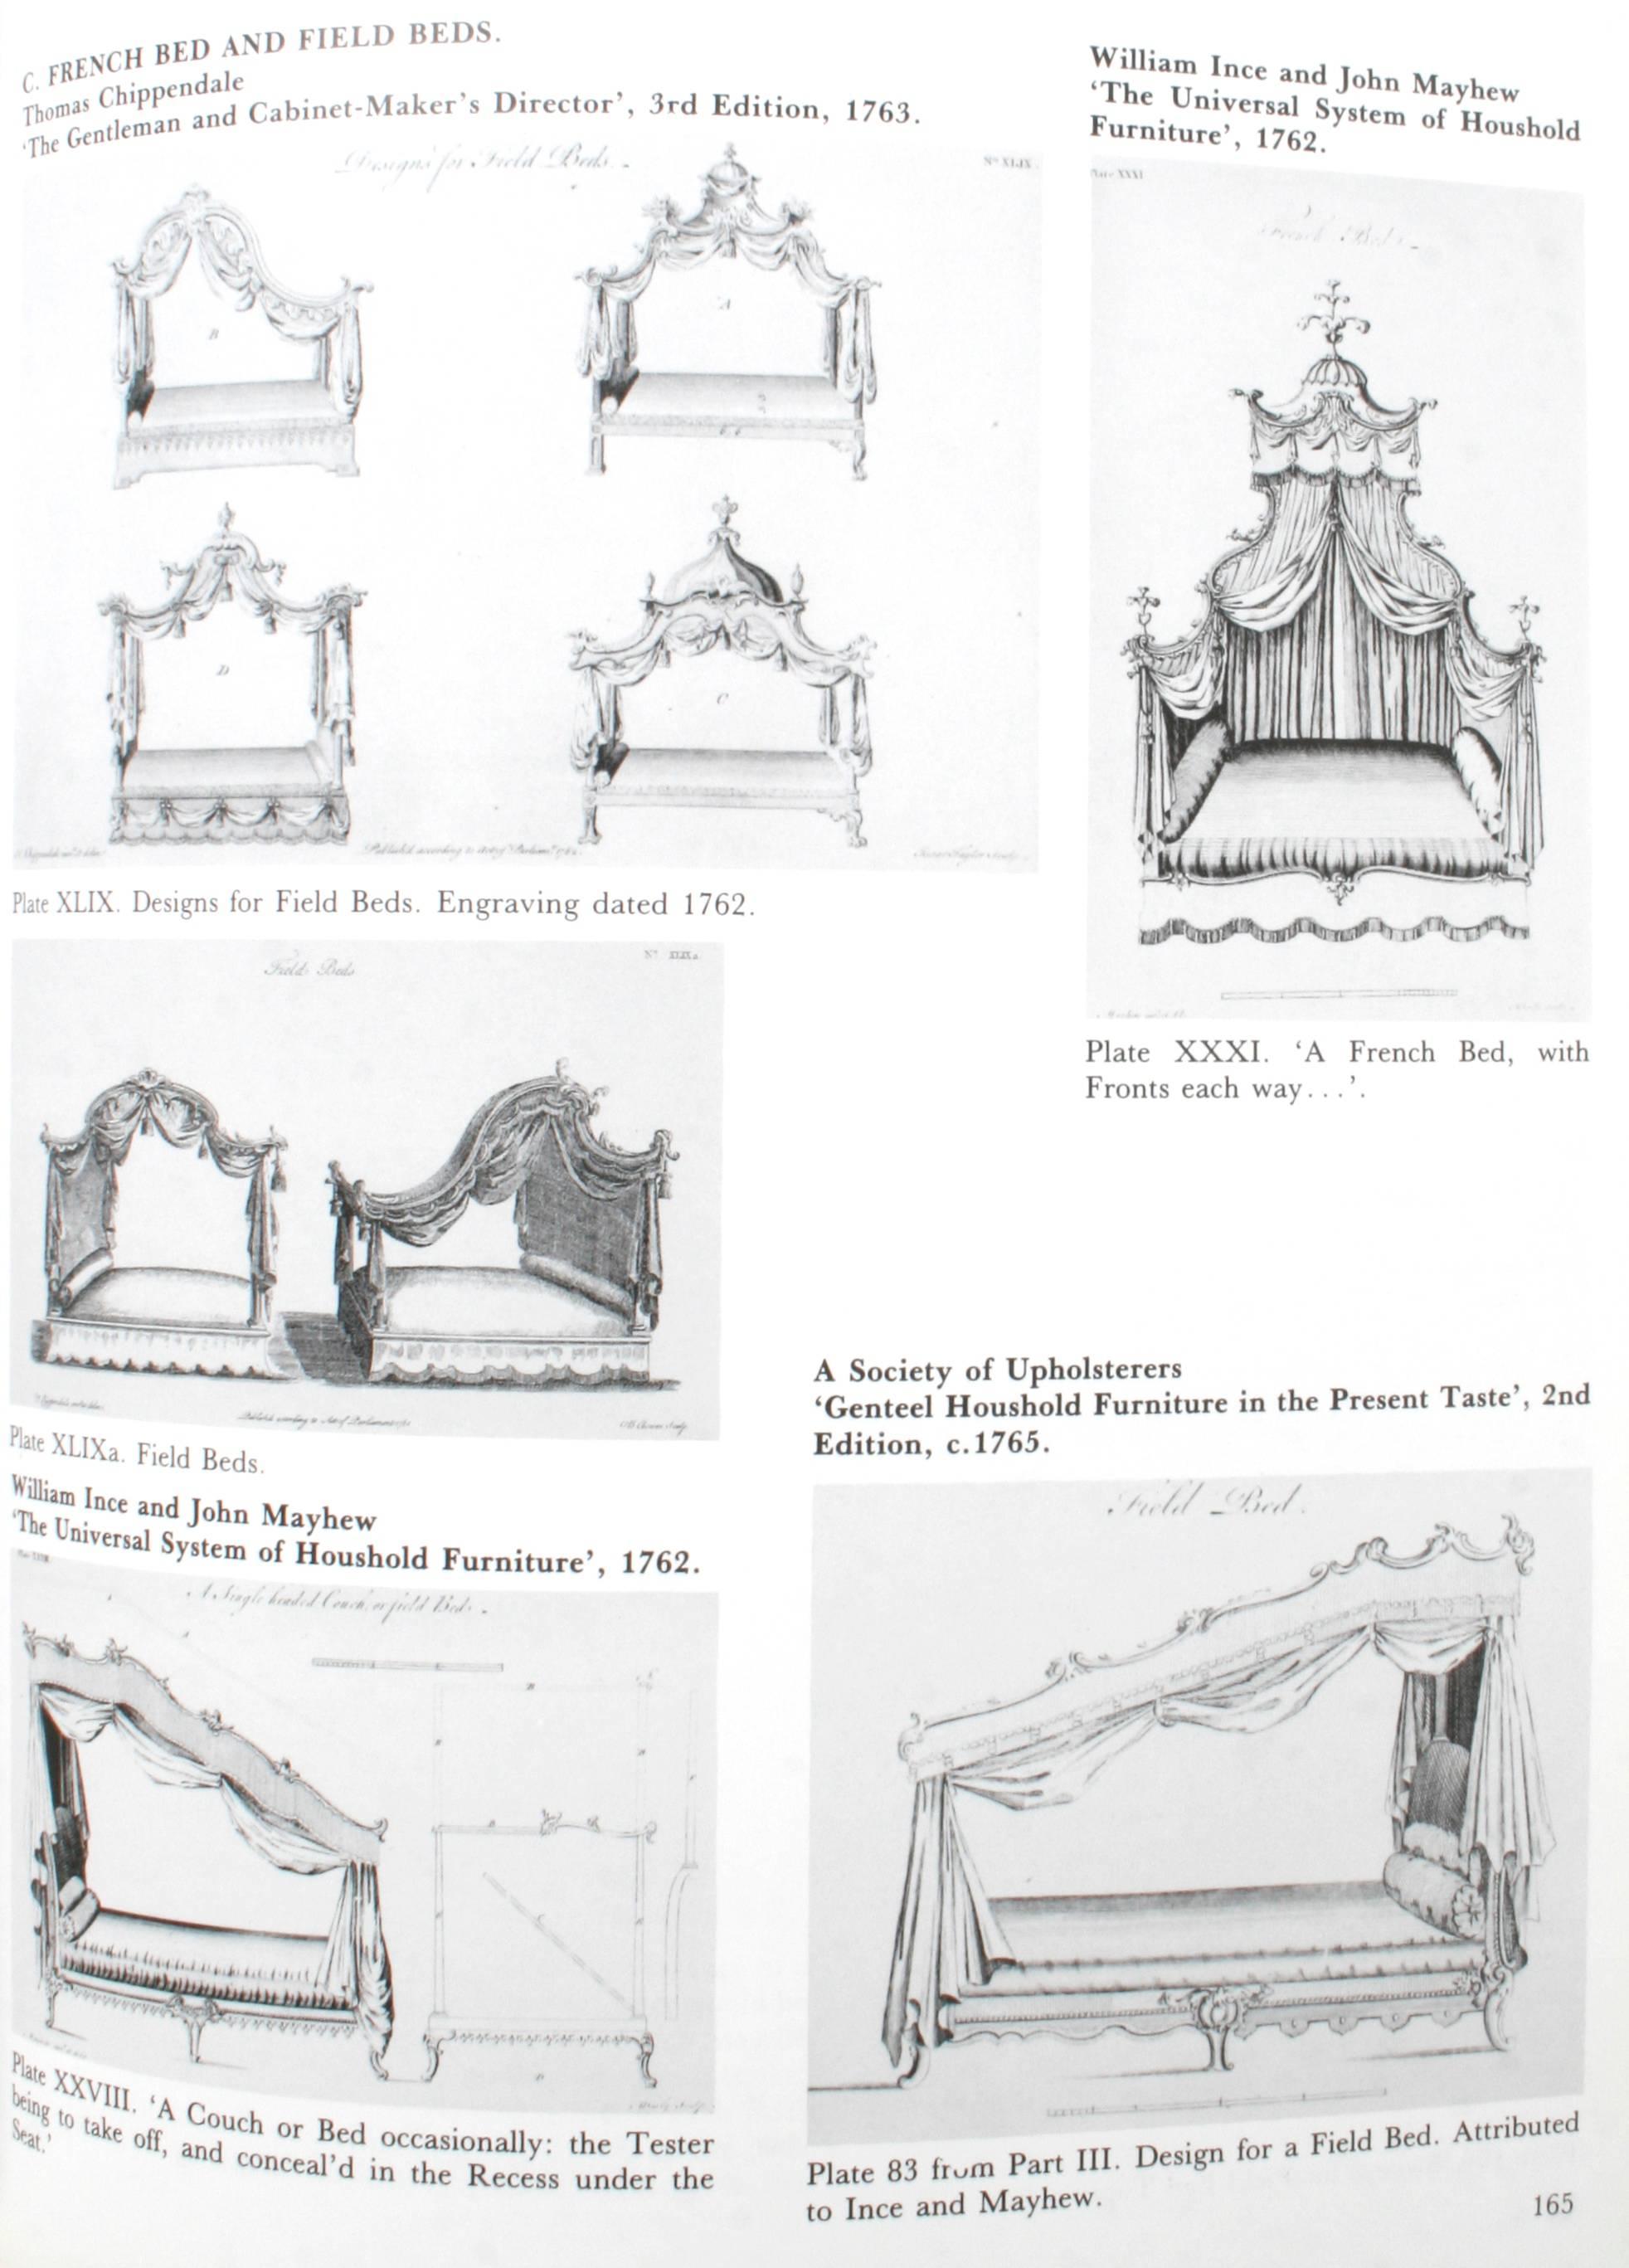 18th century furniture styles